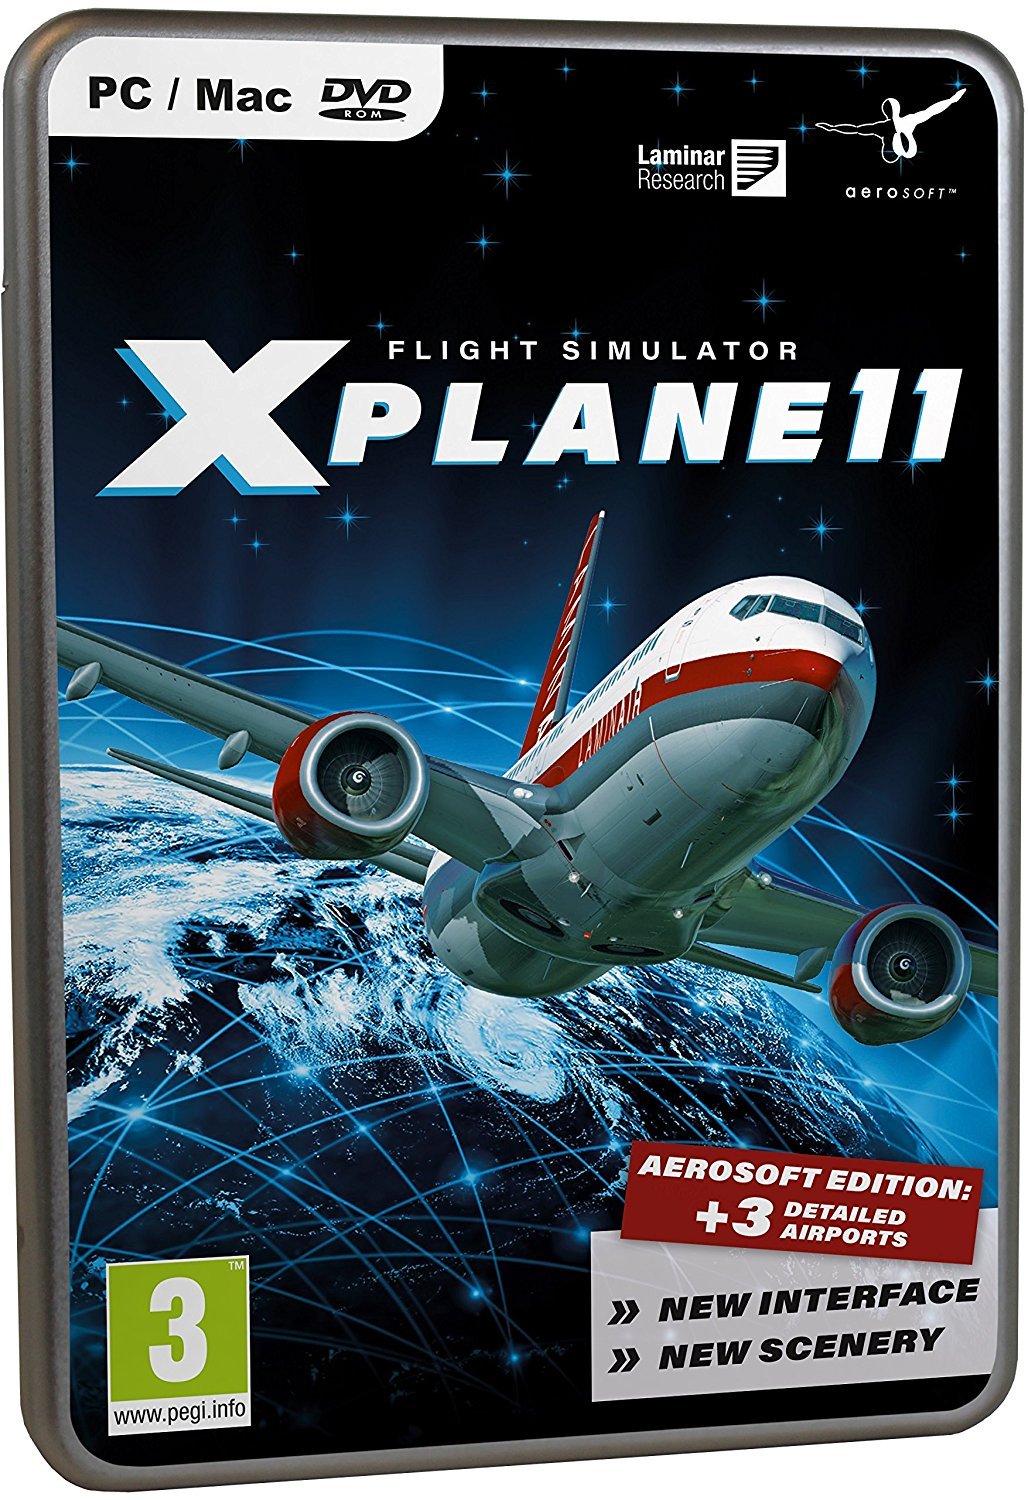 x plane 11 installer